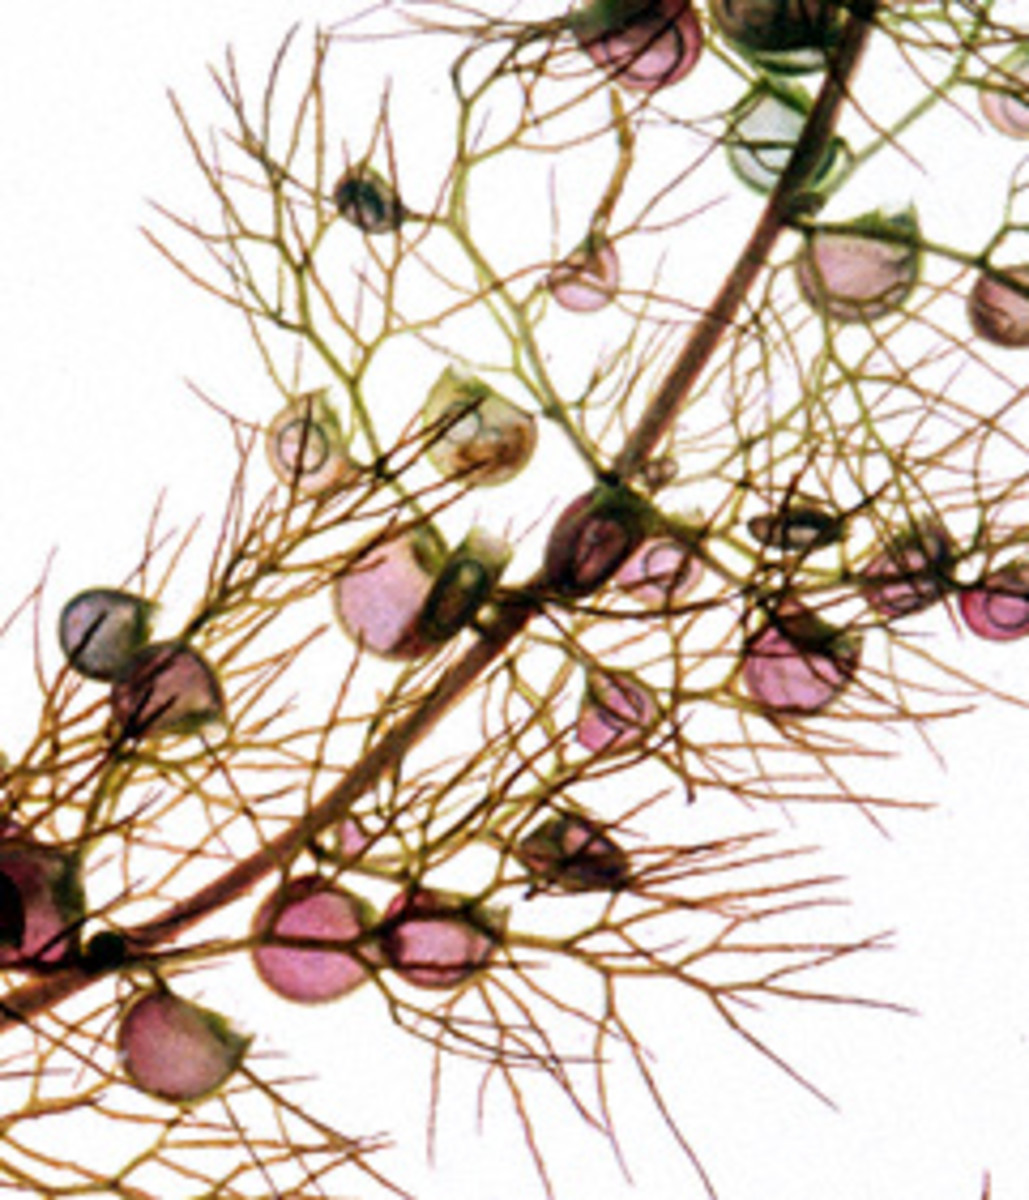 Detail on bladderwort stollons, rhizoids and bladders.